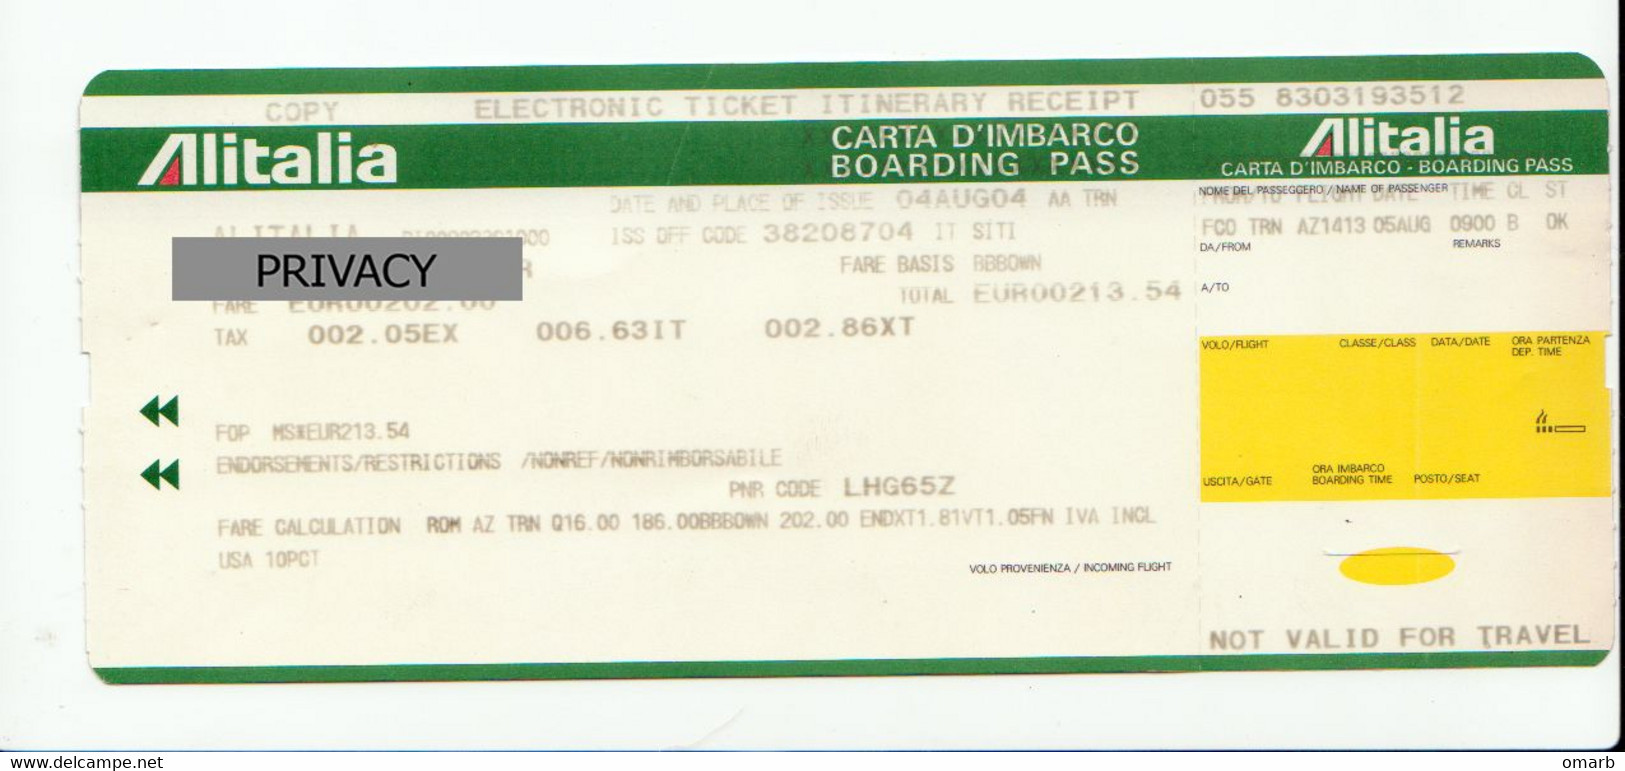 Alt1113 Alitalia Airways Billets Avion Ticket Biglietto Aereo Passenger Itinerary Receipt Imbarco Boarding Torino Roma - Europe